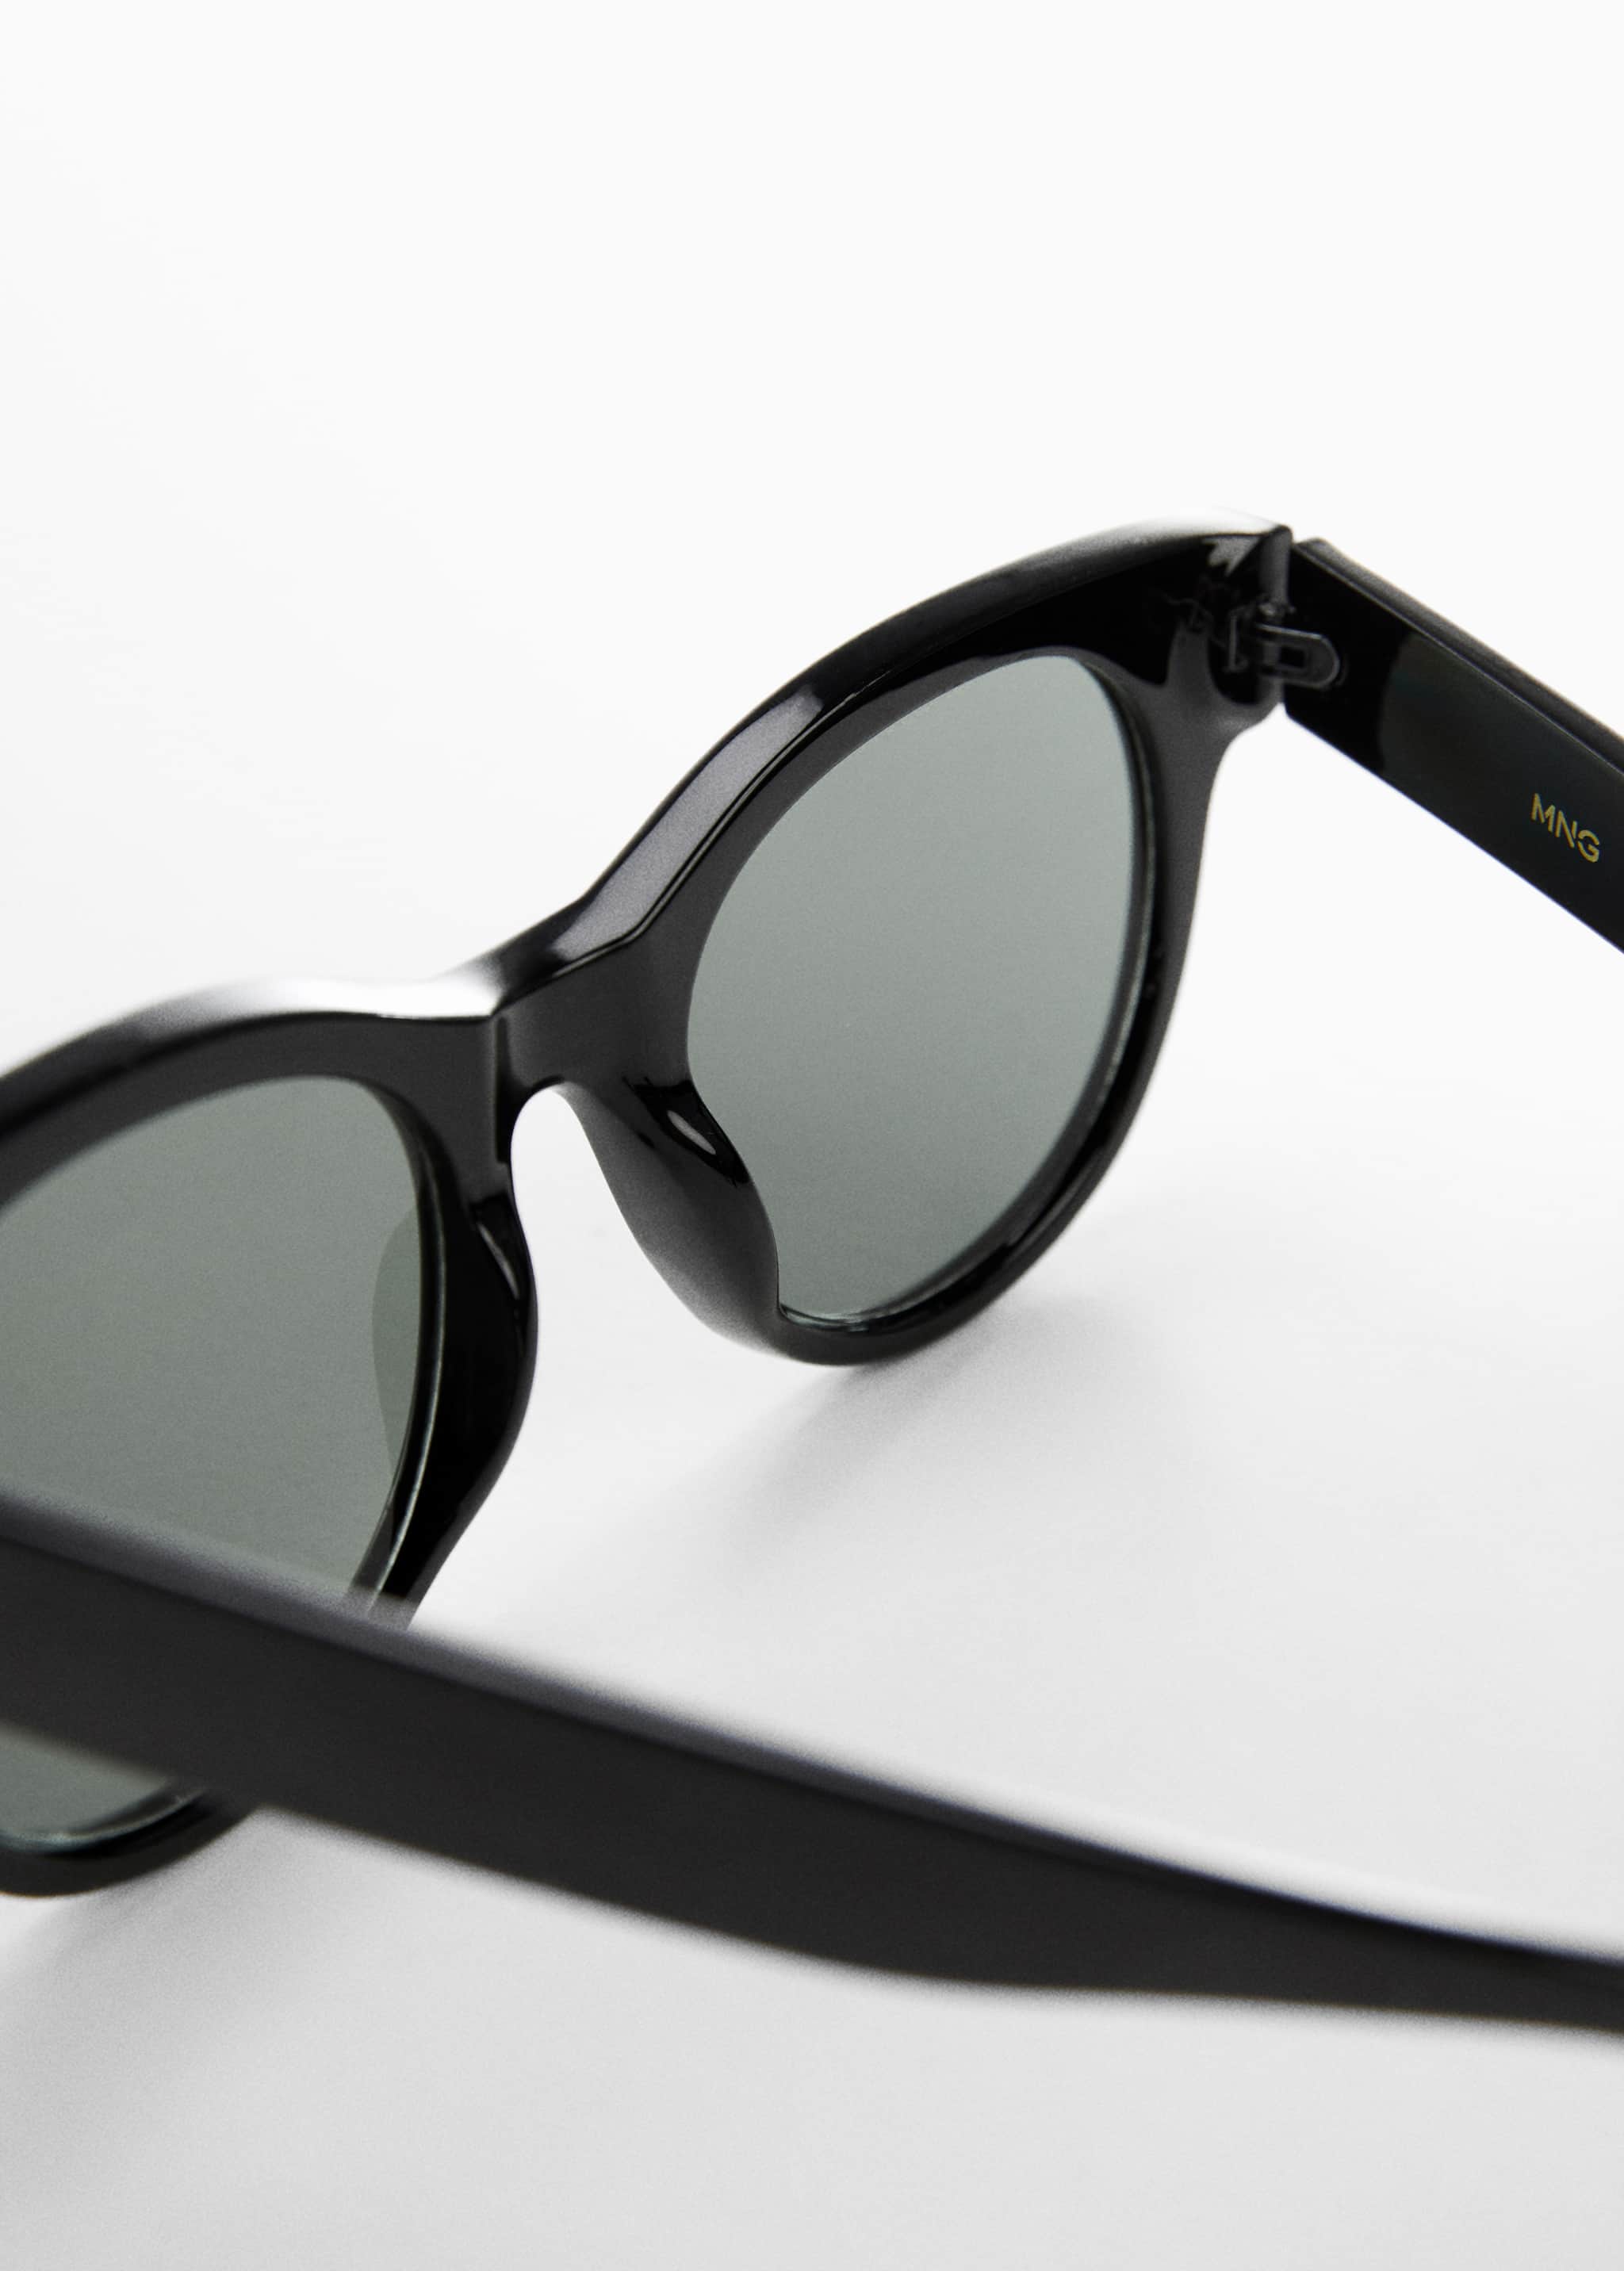 Tortoiseshell sunglasses - Details of the article 1